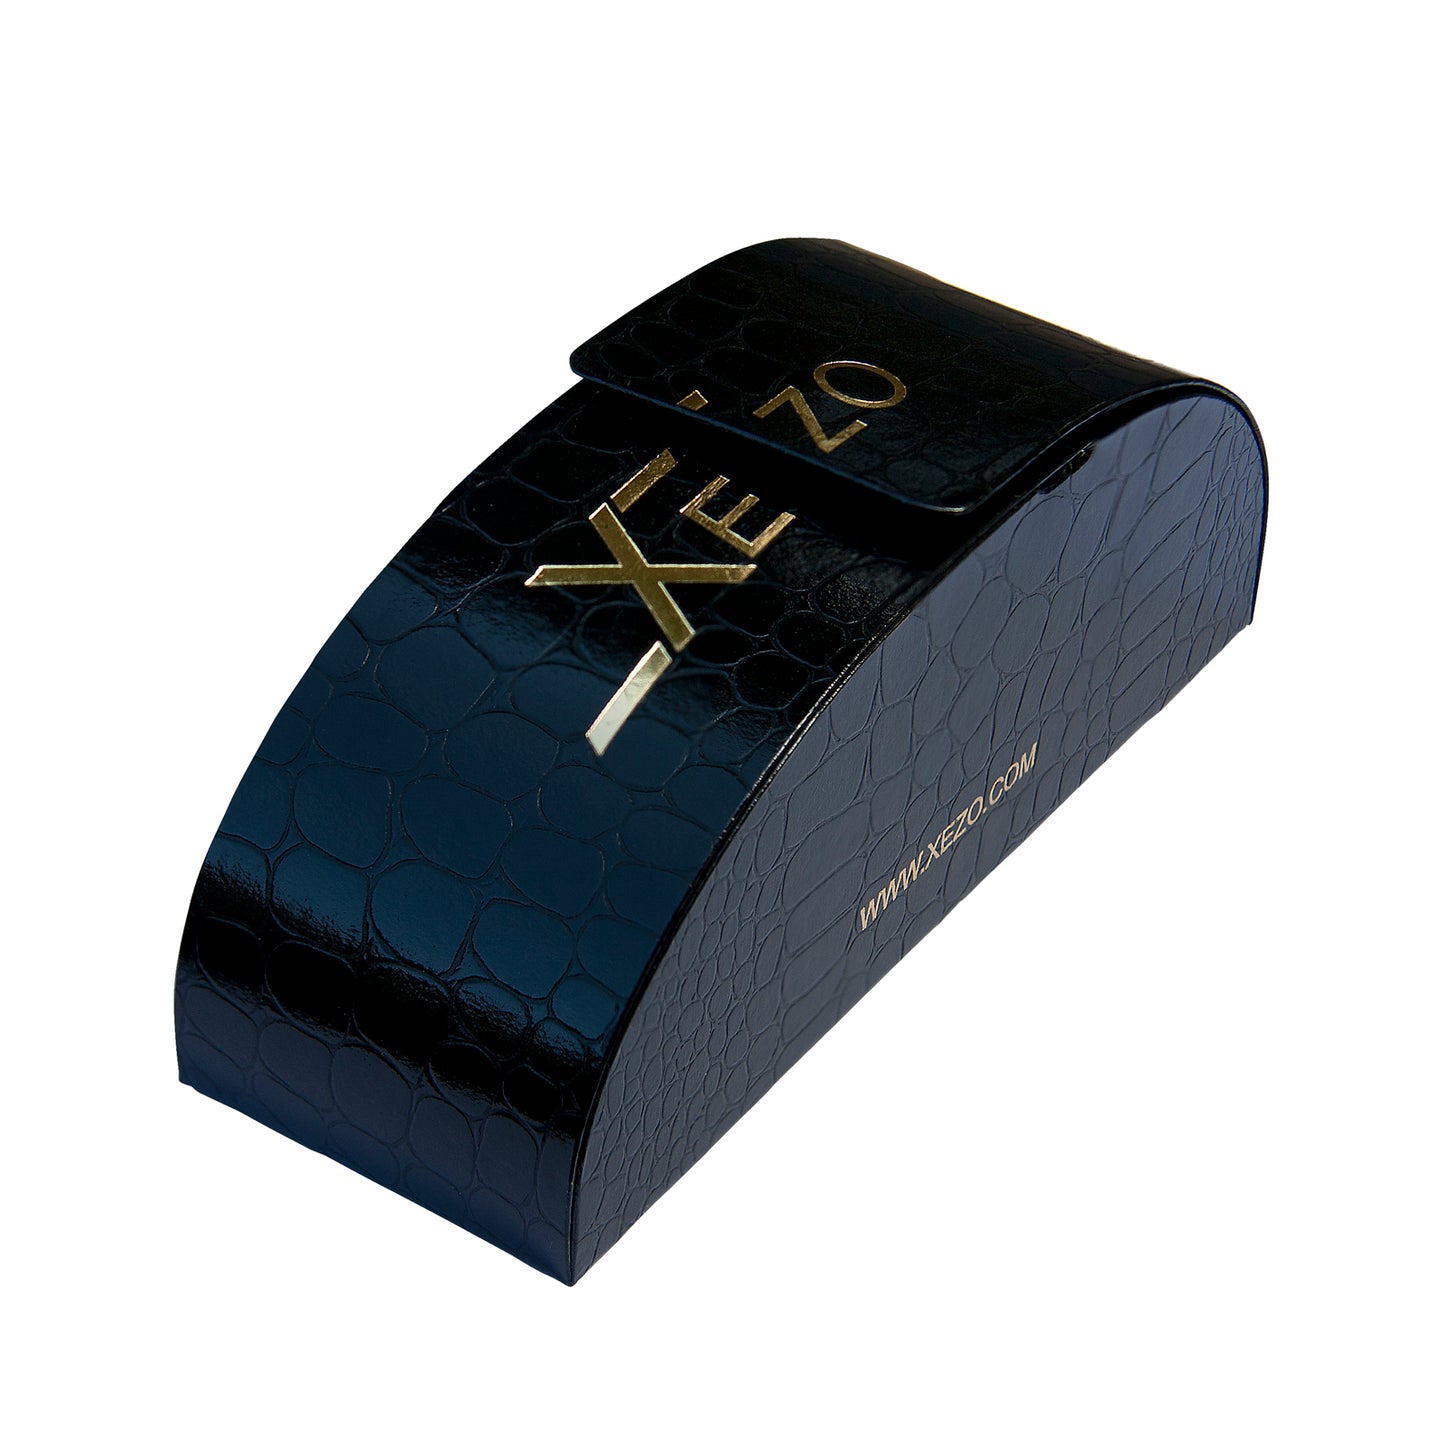 Xezo - Black gift box of the Airman 2002 B sunglasses